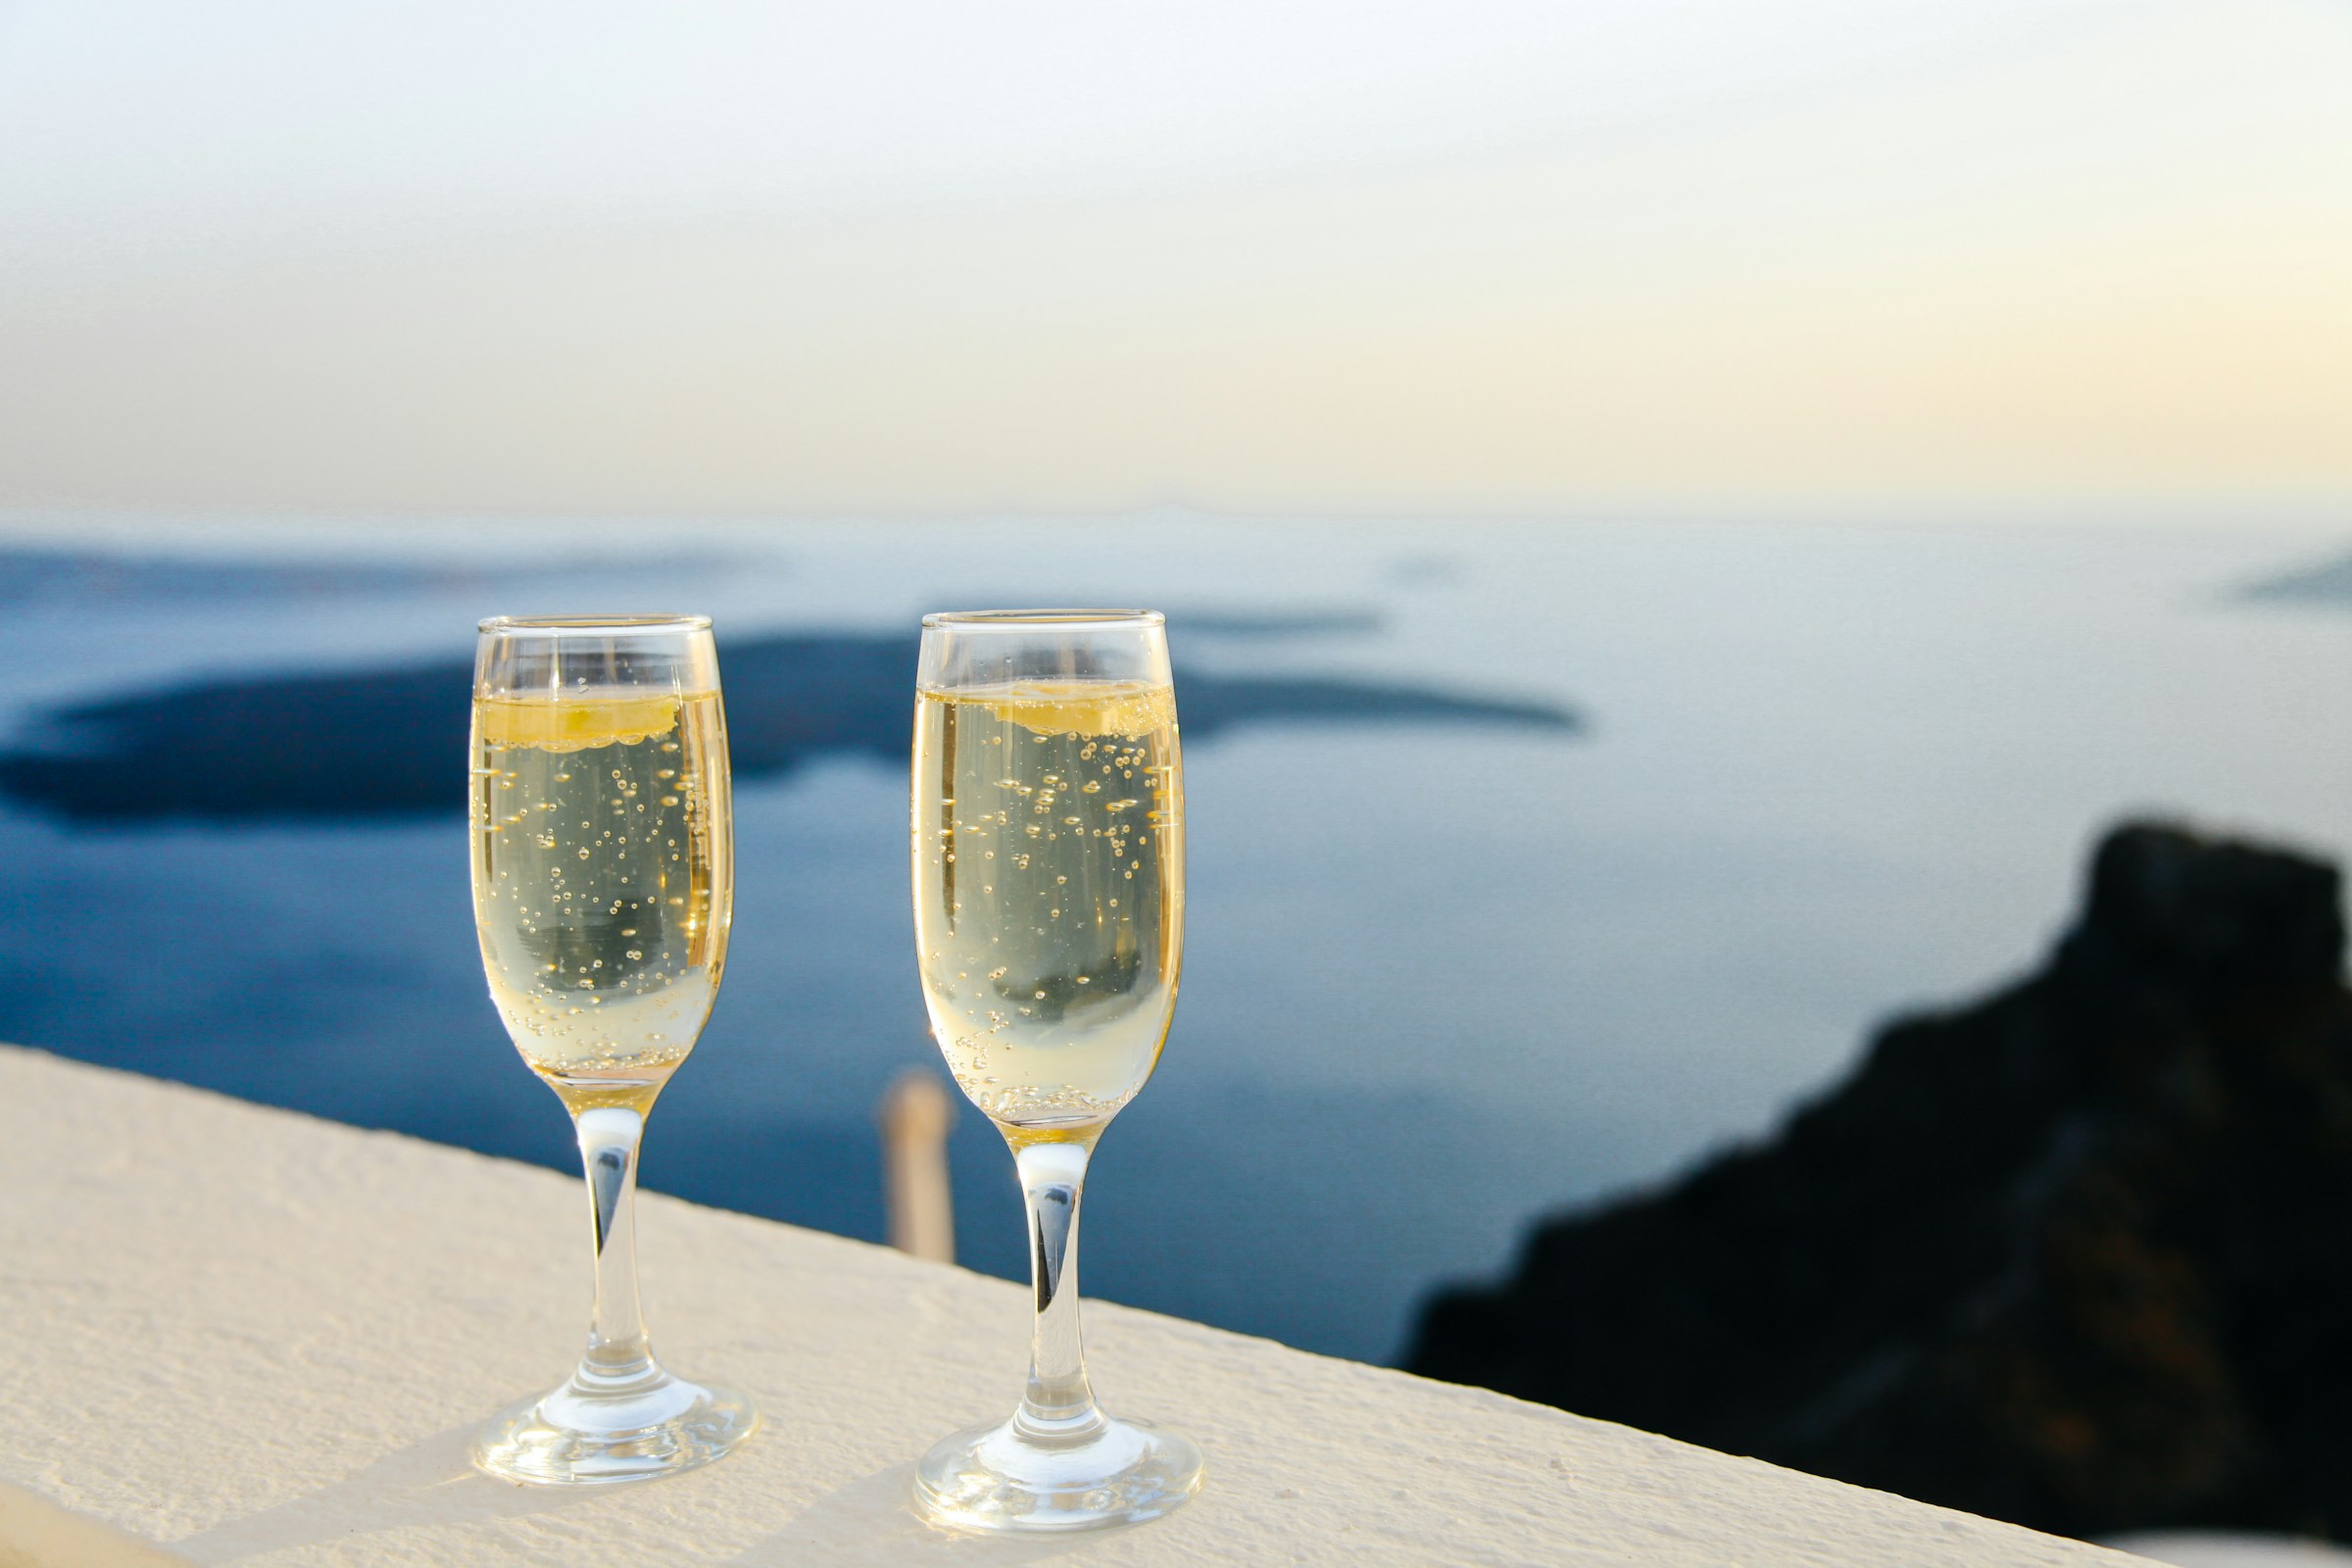 Two champagne glasses | Source: Unsplash